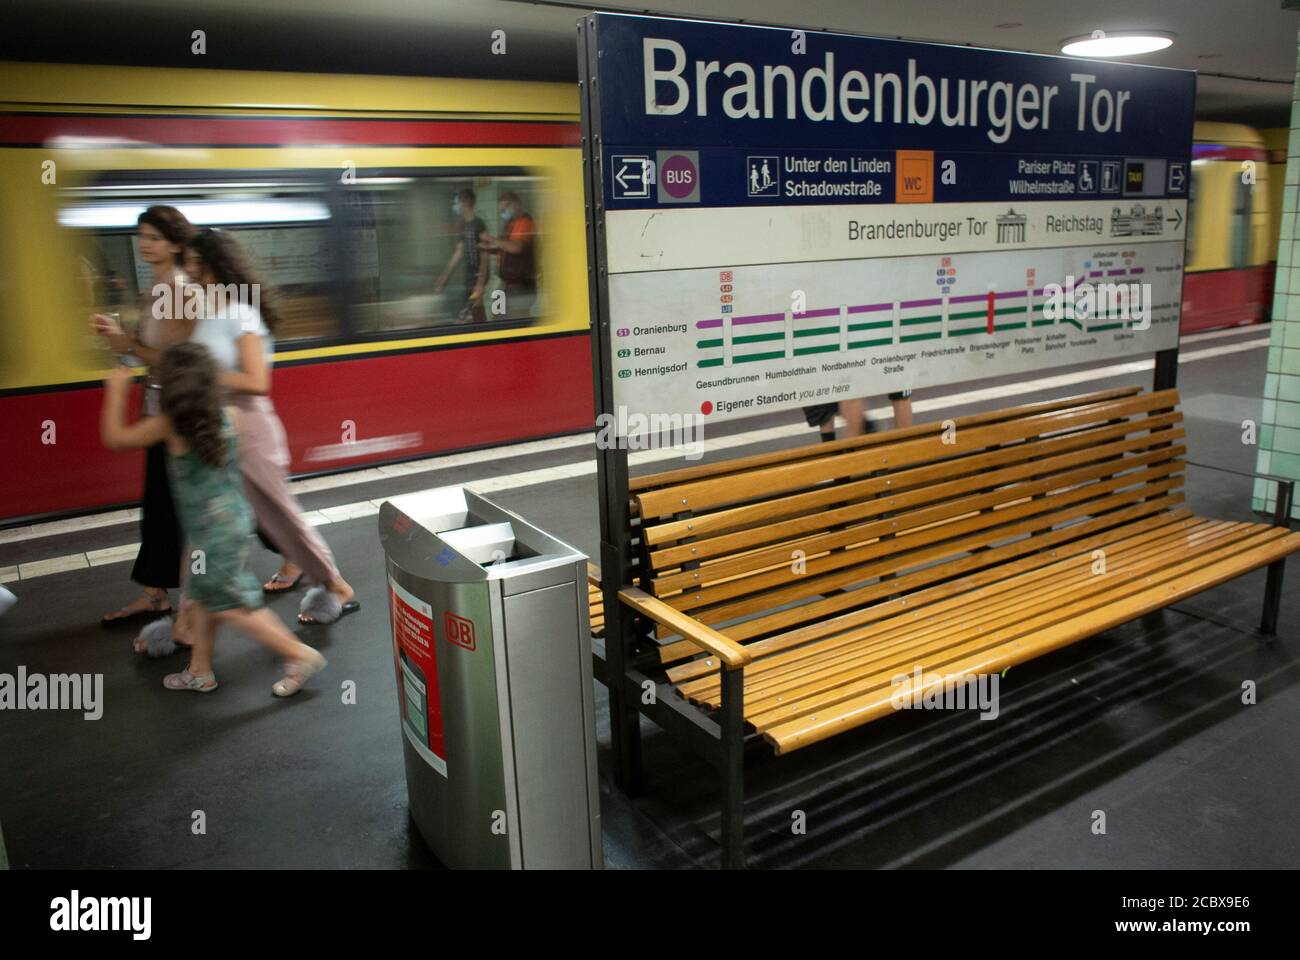 Brandenburger Tor U-Bahn and S-Bahn Station, Berlin, Germany. Stock Photo